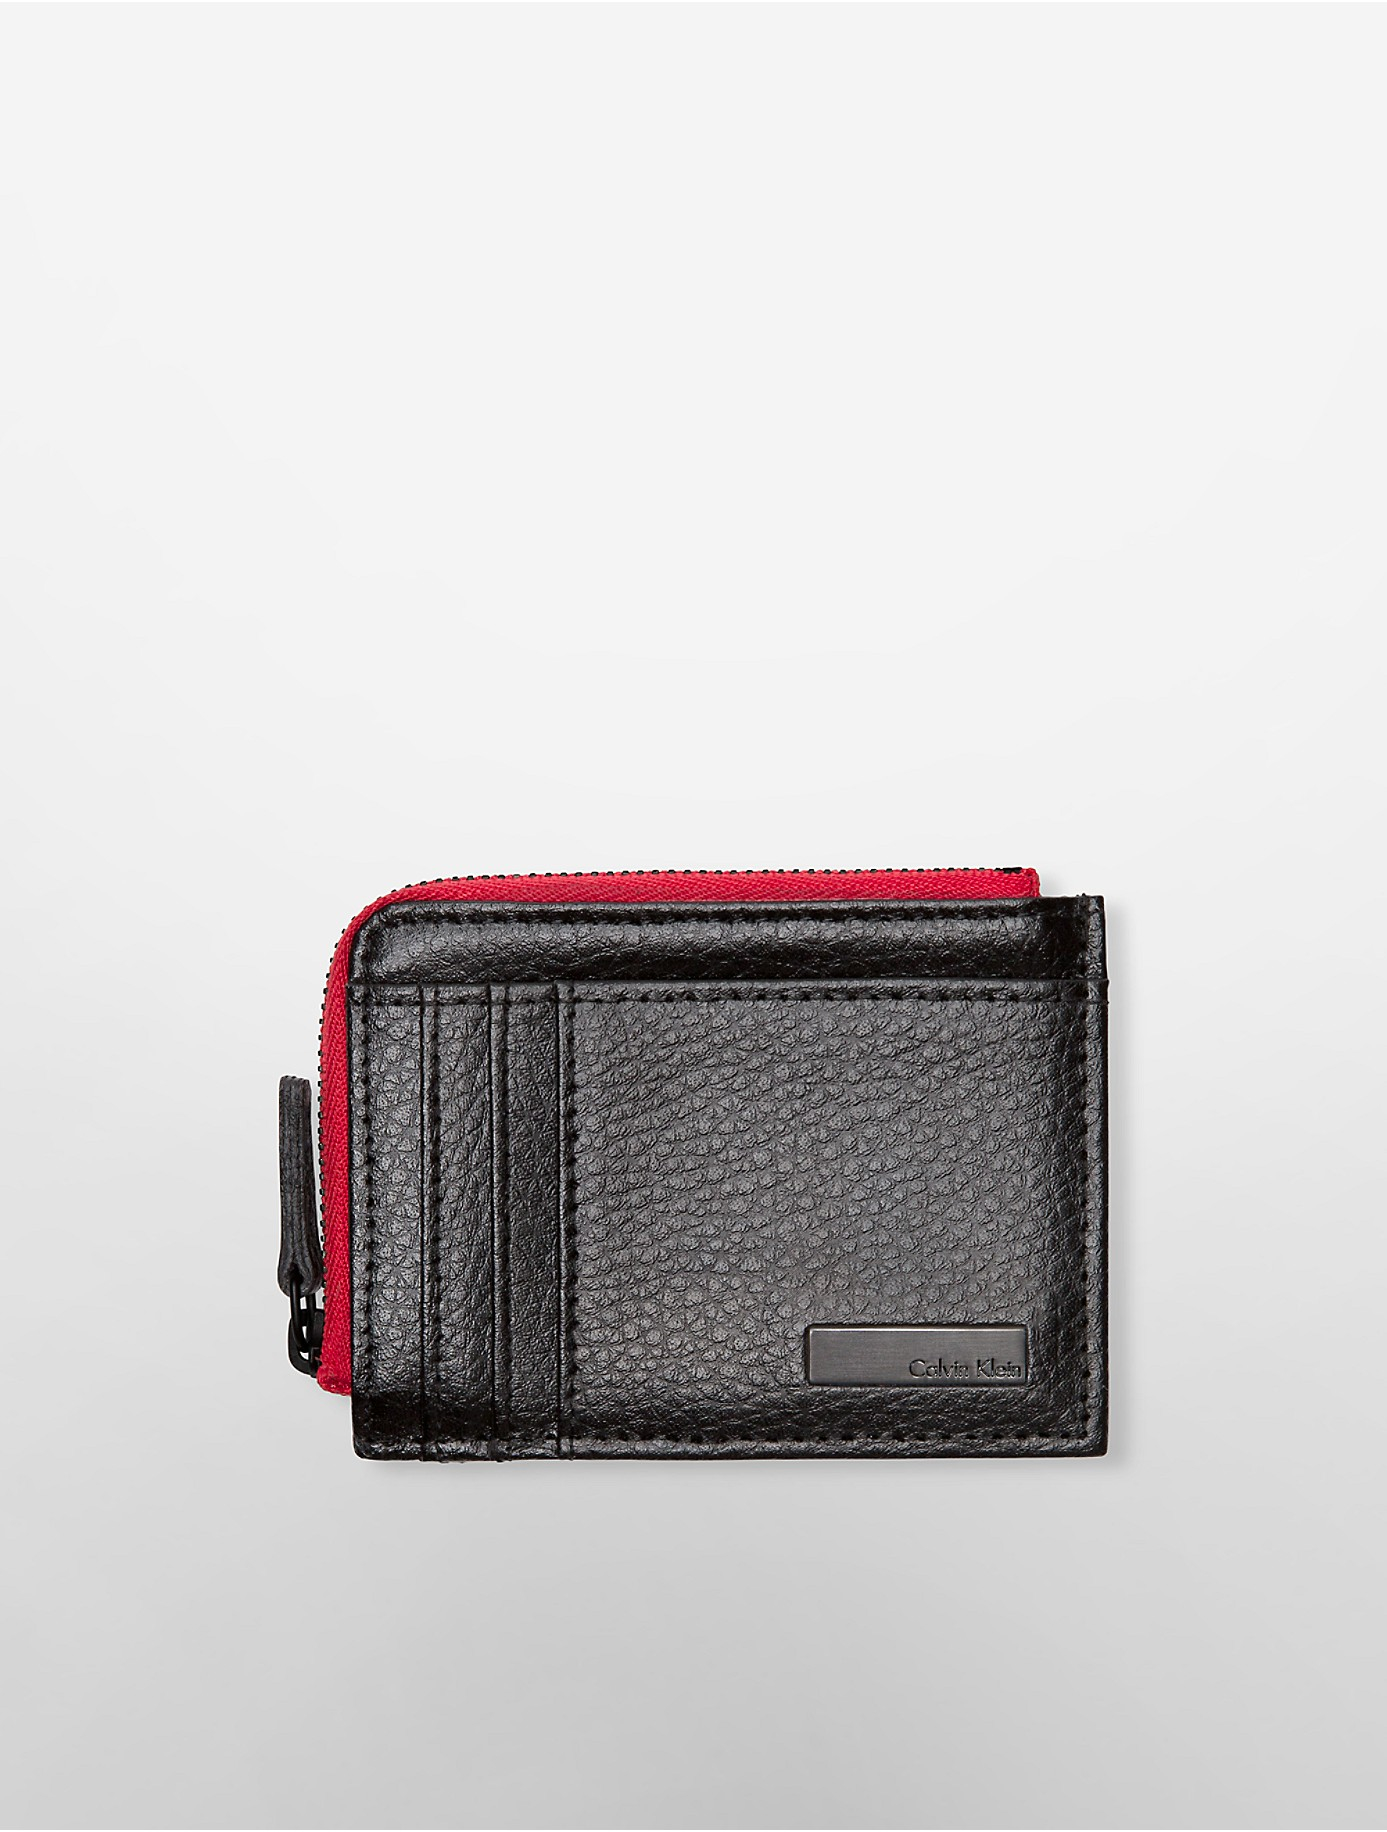 Calvin Klein Leather Soho Zip Commuter Wallet in Black for Men - Lyst